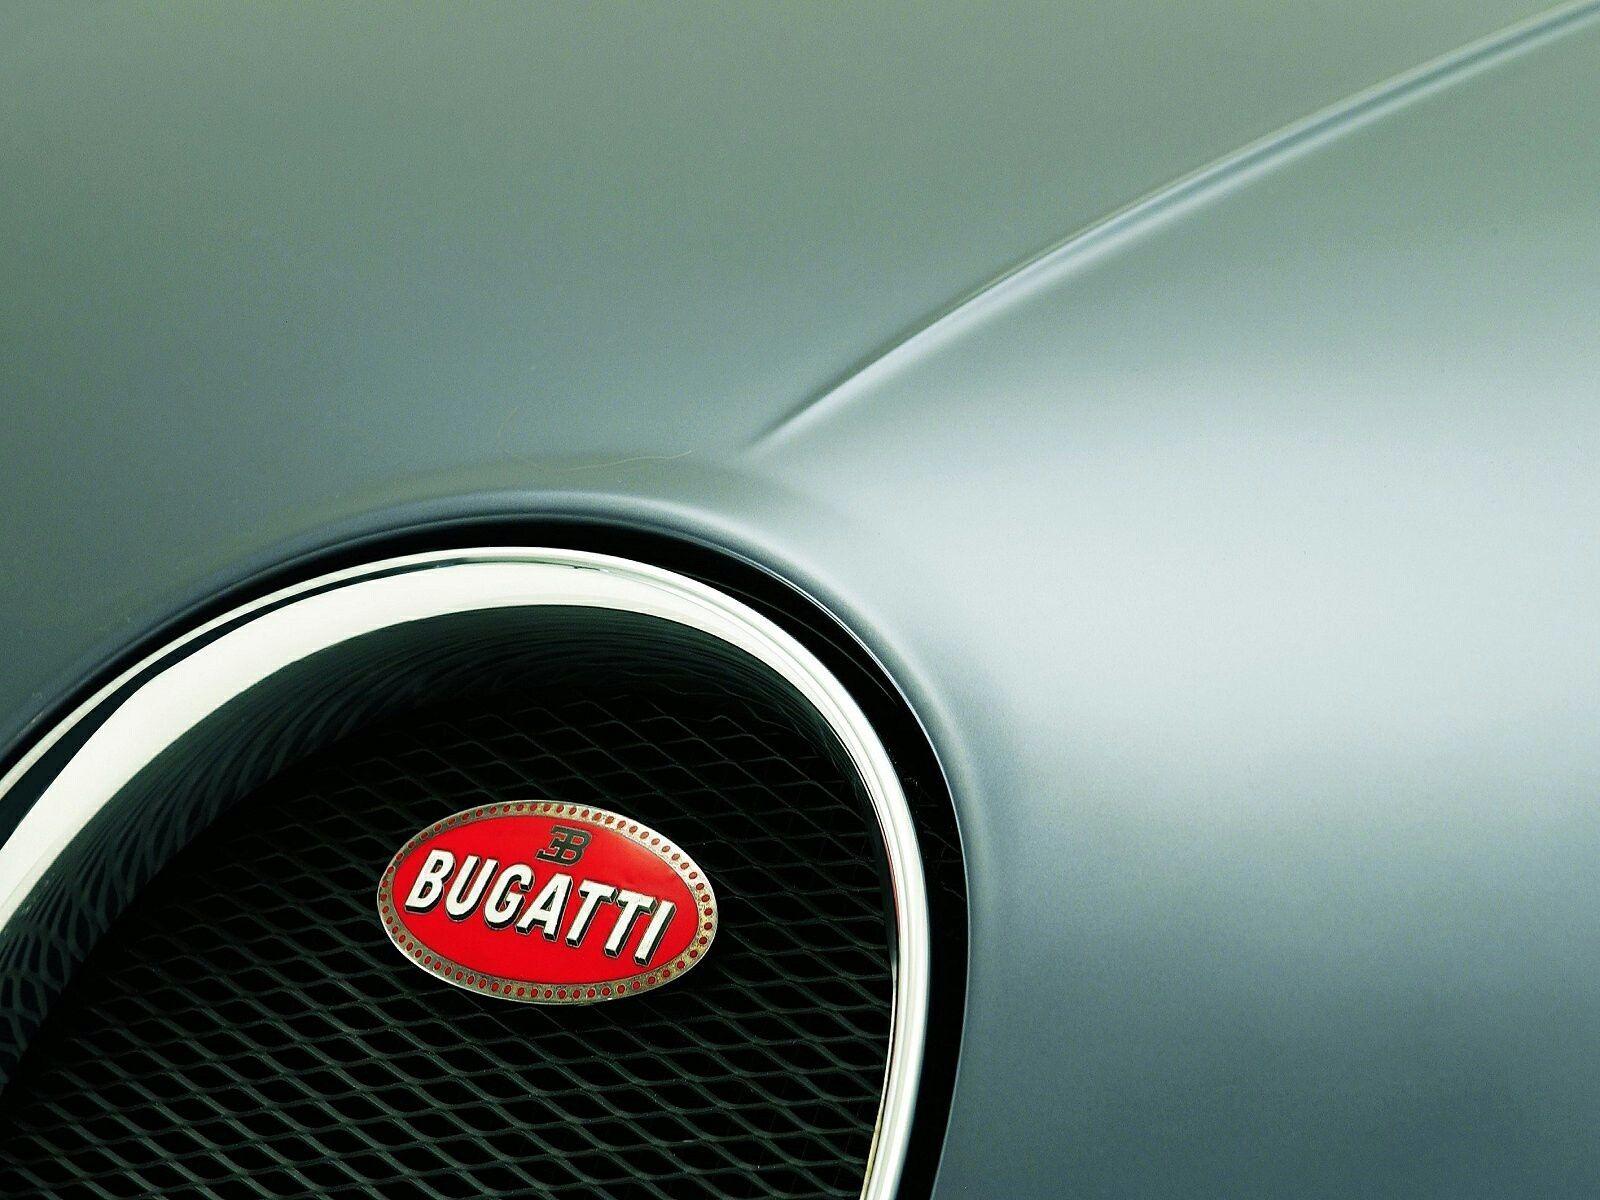 Bugatti Veyron Logo - Bugatti Logo, Bugatti Car Symbol Meaning and History. Car Brand